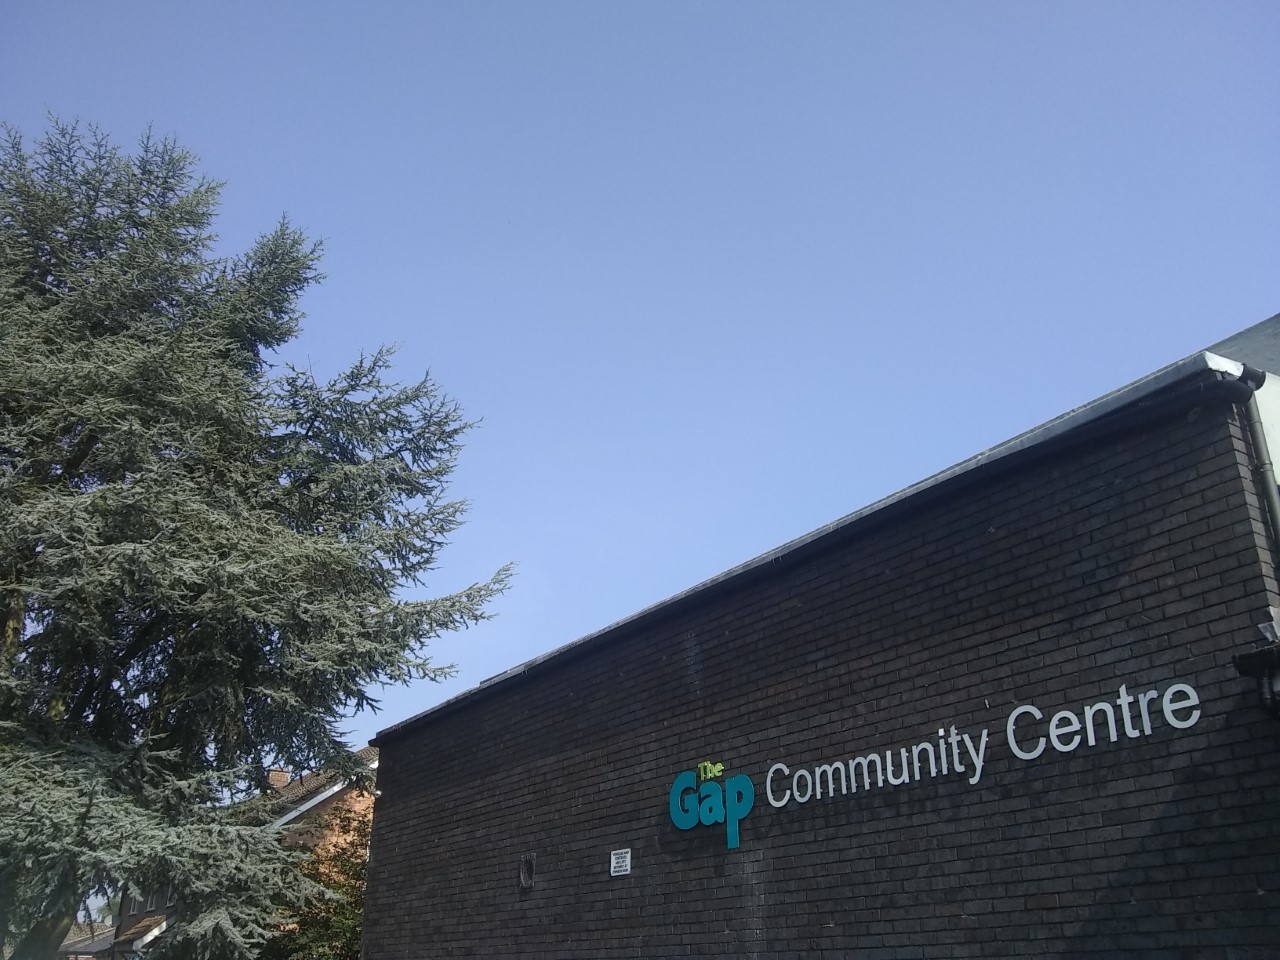 The Gap Community Centre